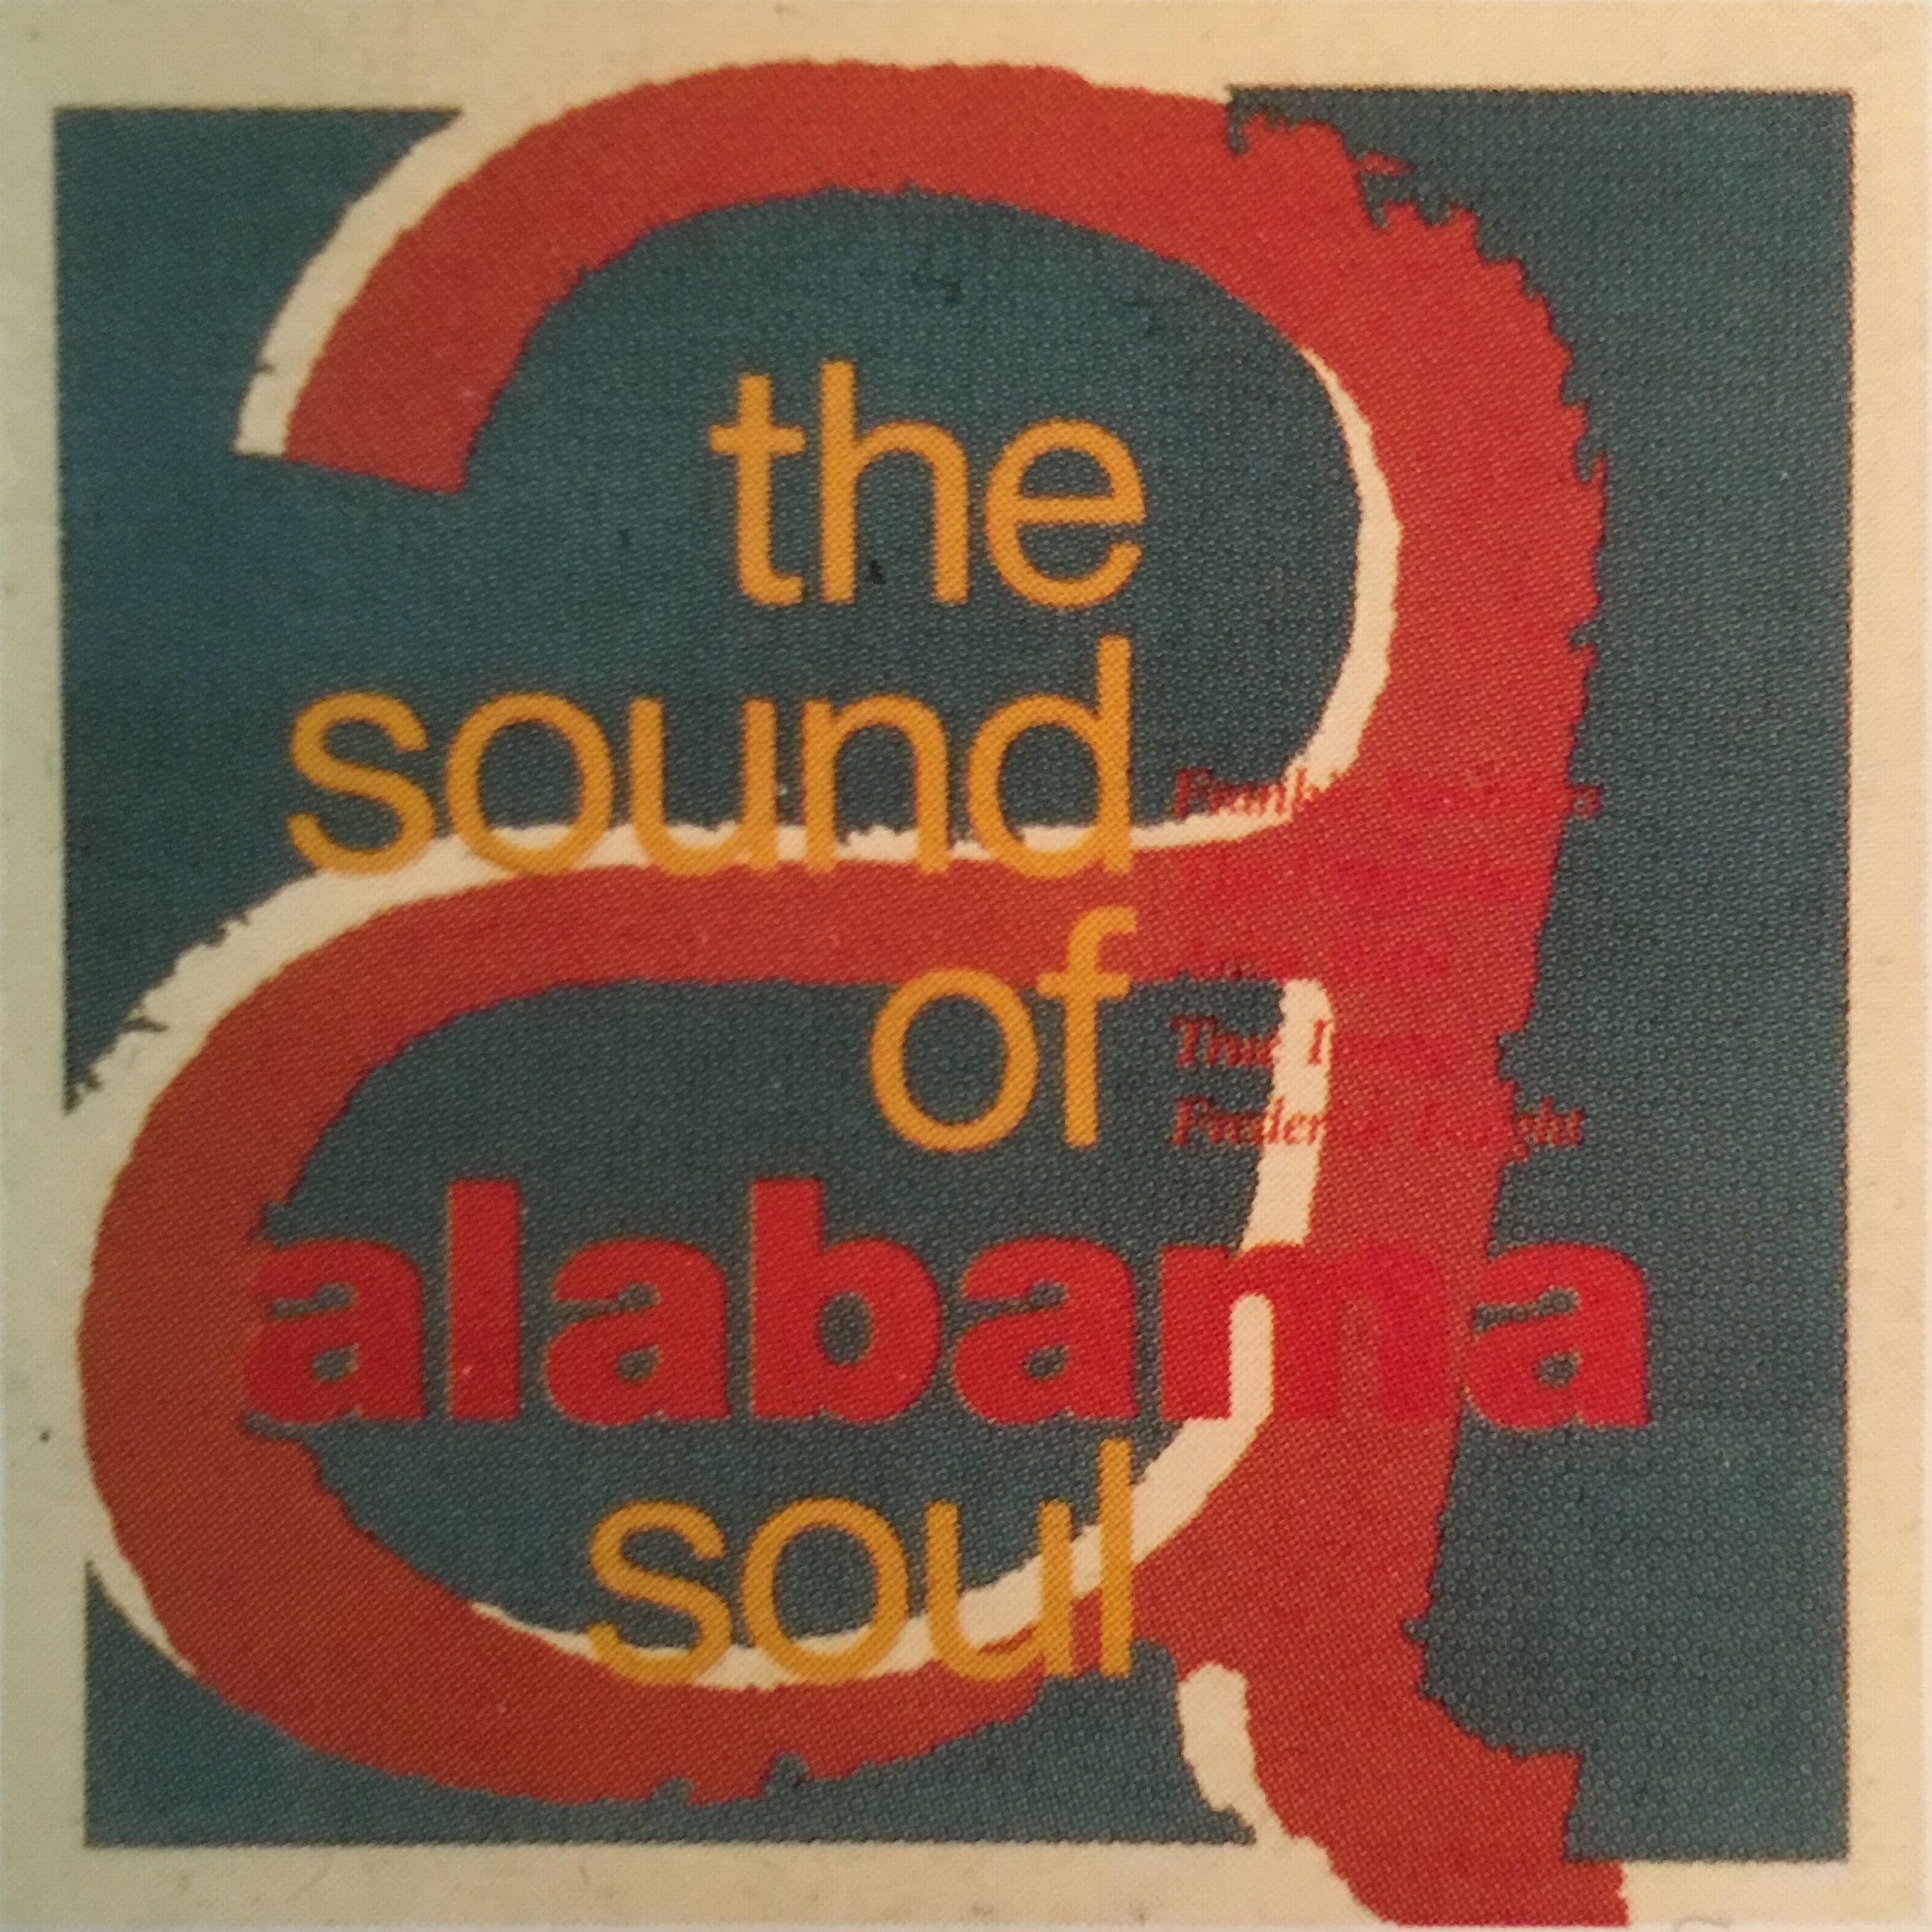 The Sound of Alabama Soul, Vol. 1